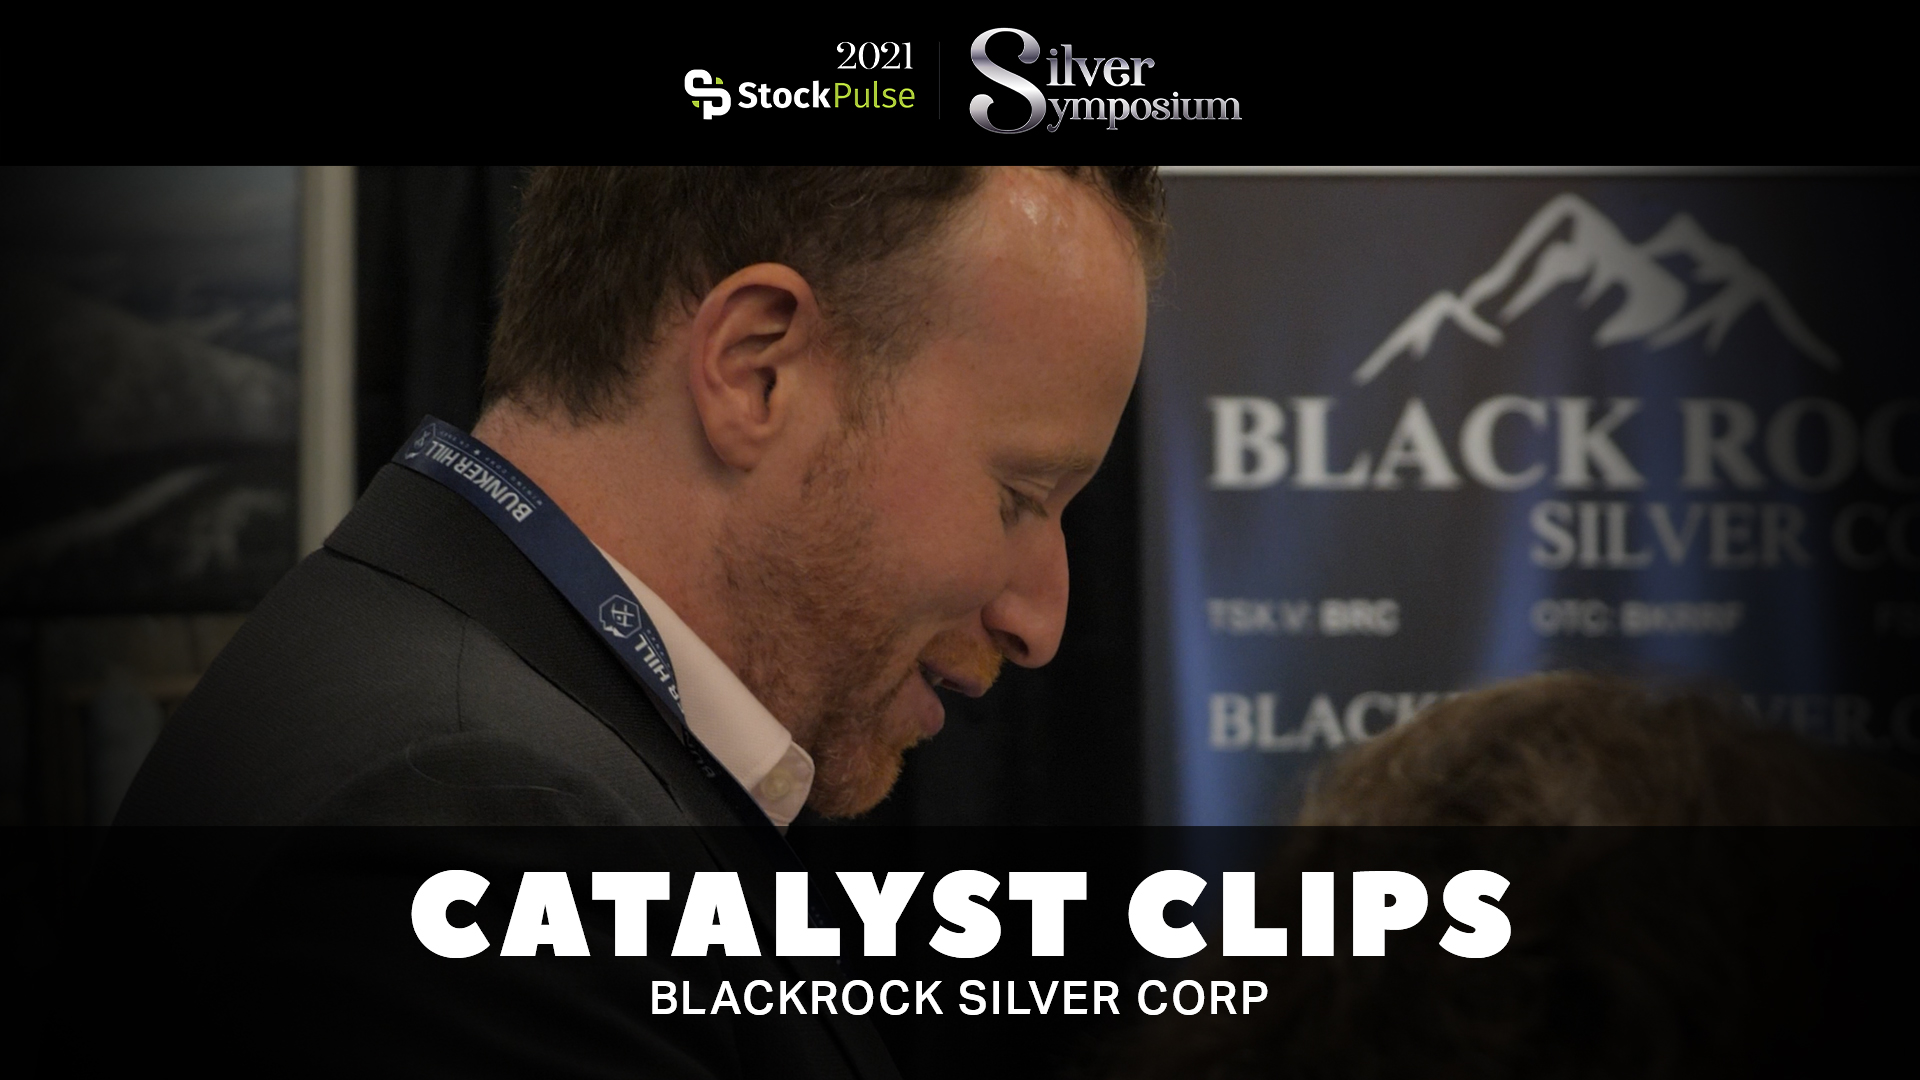 2021 StockPulse Silver Symposium Catalyst Clips | Andrew Pollard of Blackrock Silver Corp